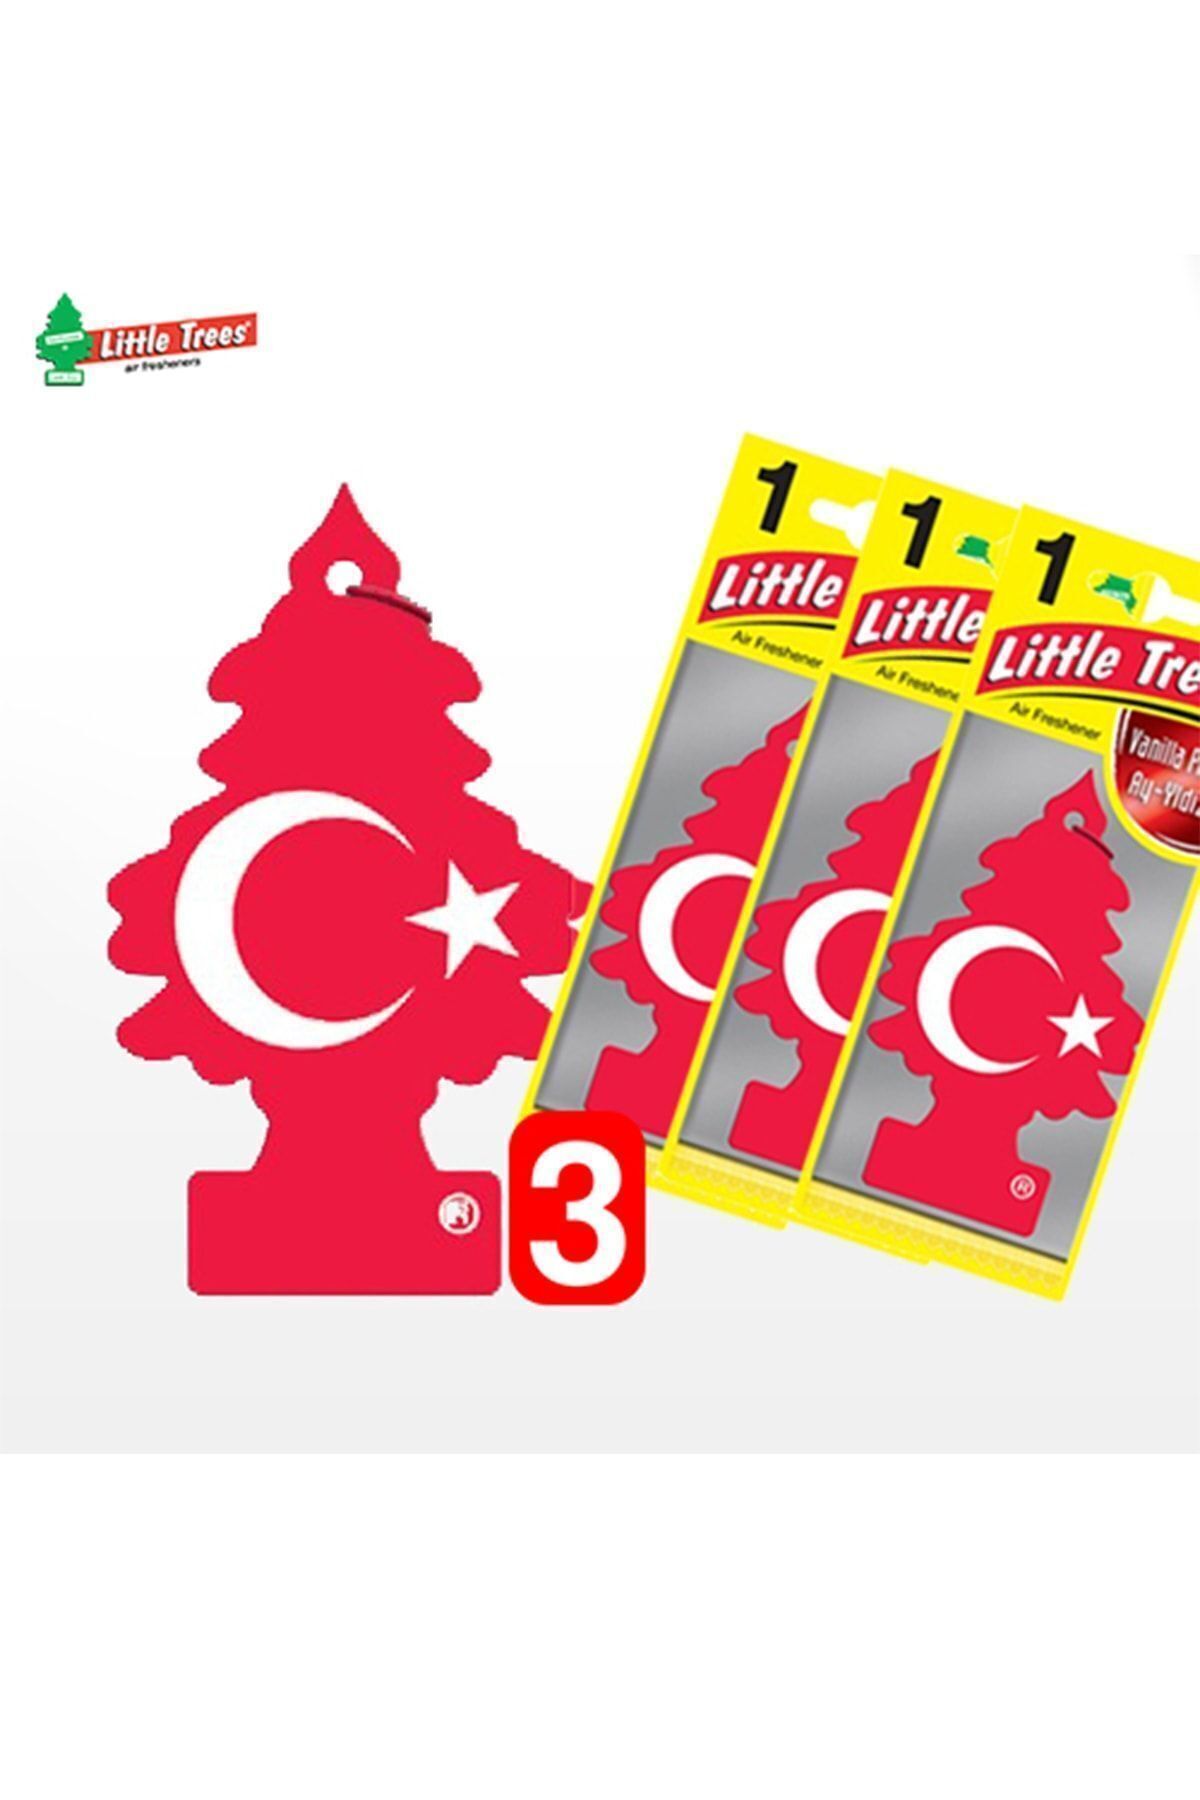 Car Freshner Little Trees Vanilla Pride Türk Bayrağı Oto Kokusu 3 Adet 55008 10411131